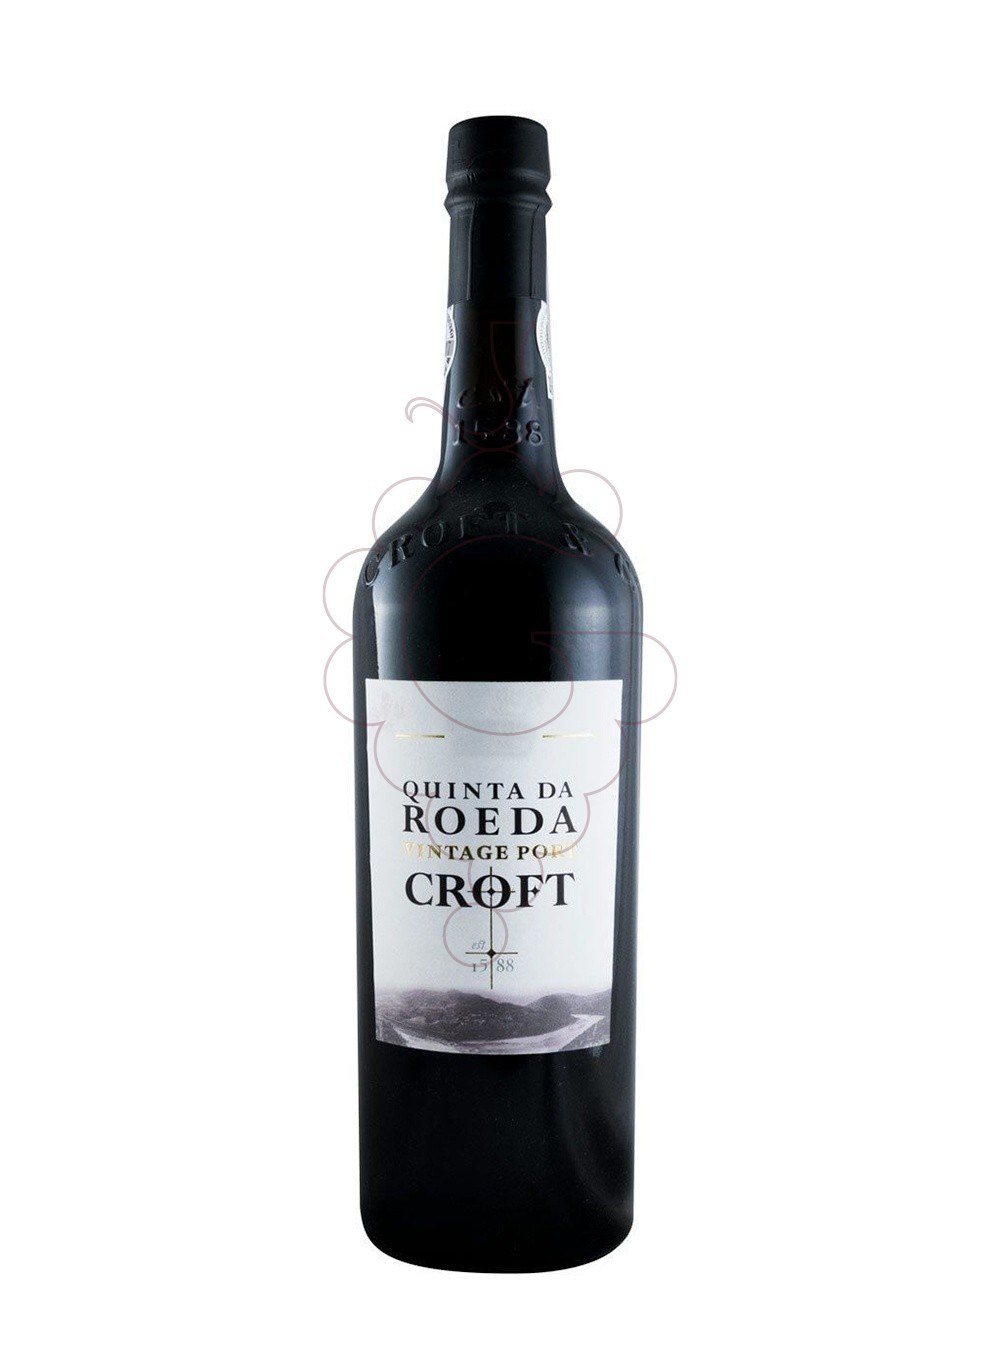 Photo Croft quinta da roeda 2018 fortified wine